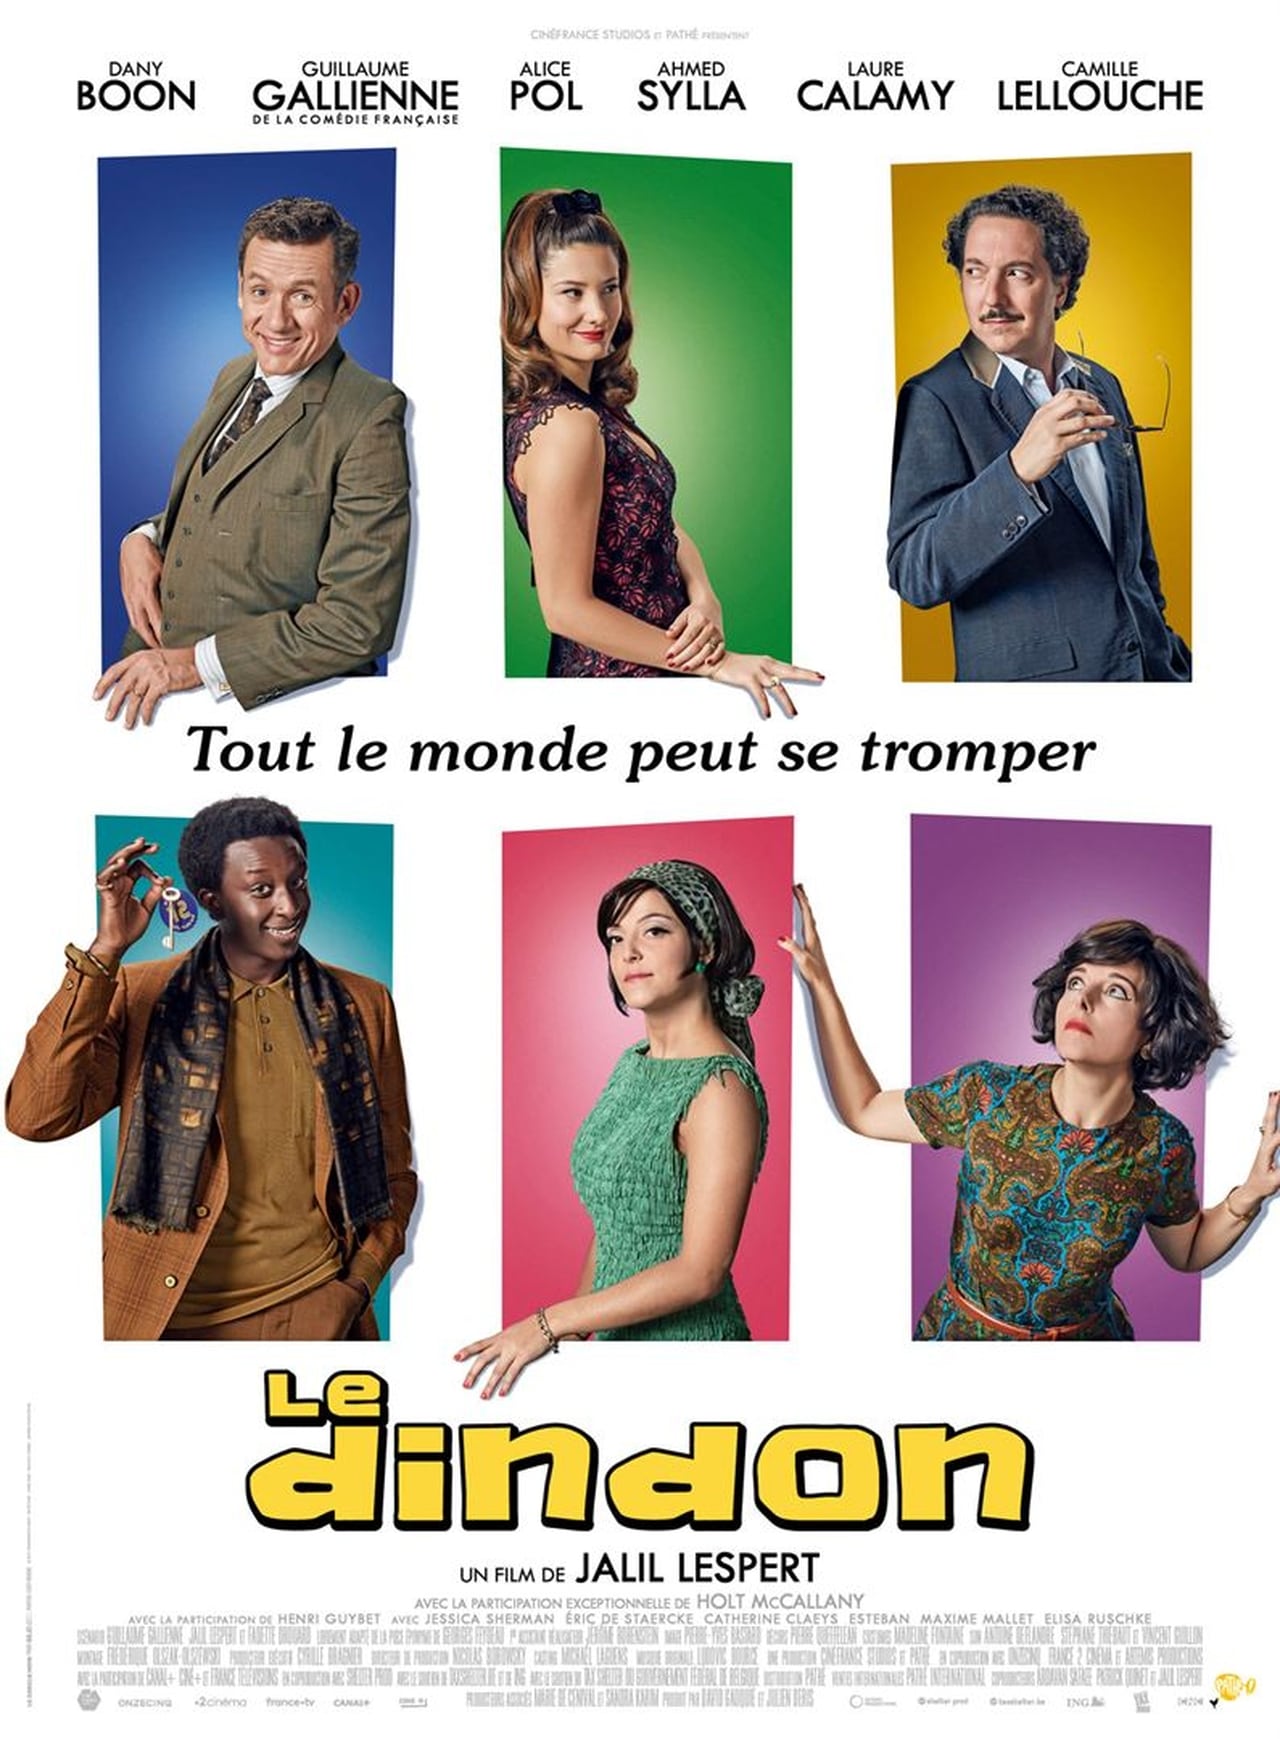 FR - Le Dindon (2019) - DANY BOON